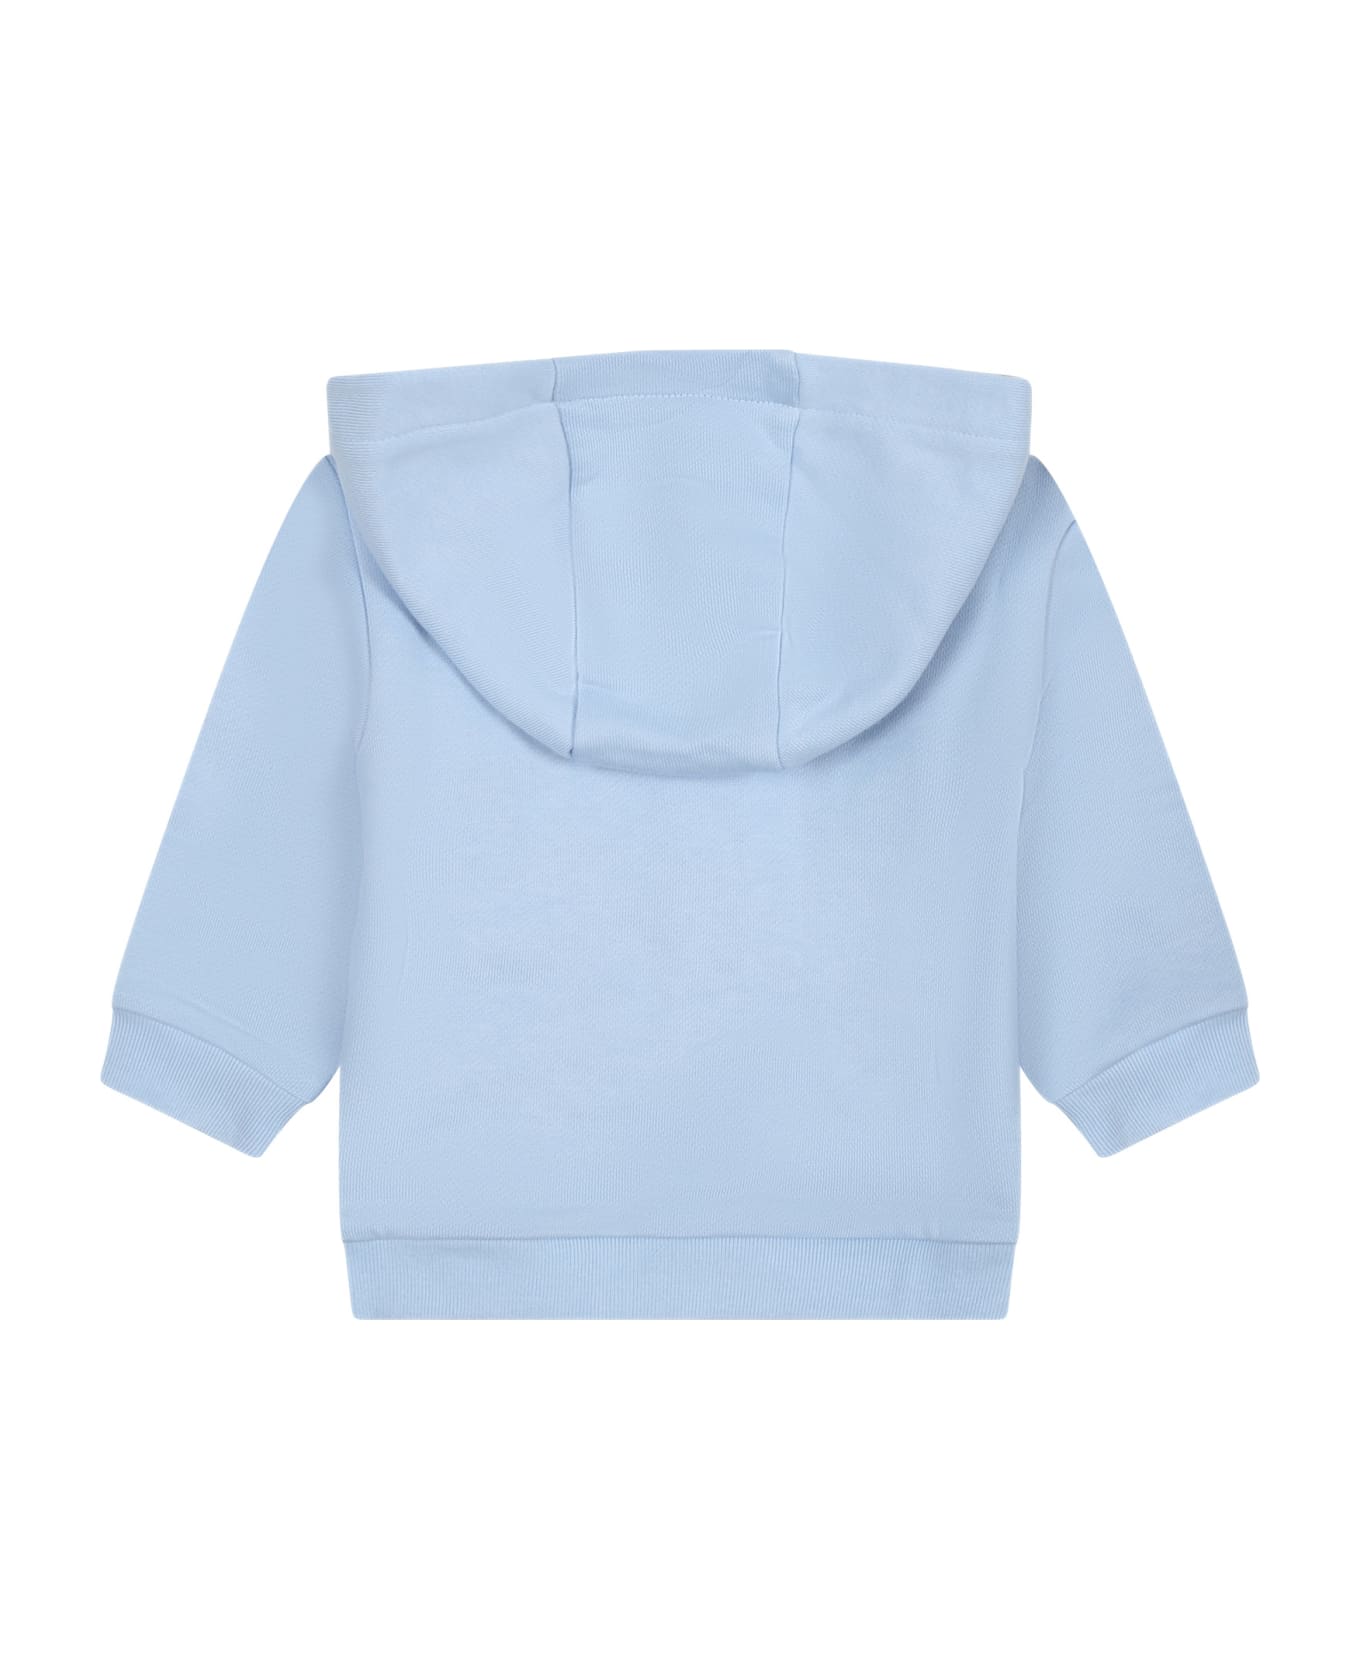 Fendi Light Blue Sweatshirt For Baby Boy With Logo - Light Blue